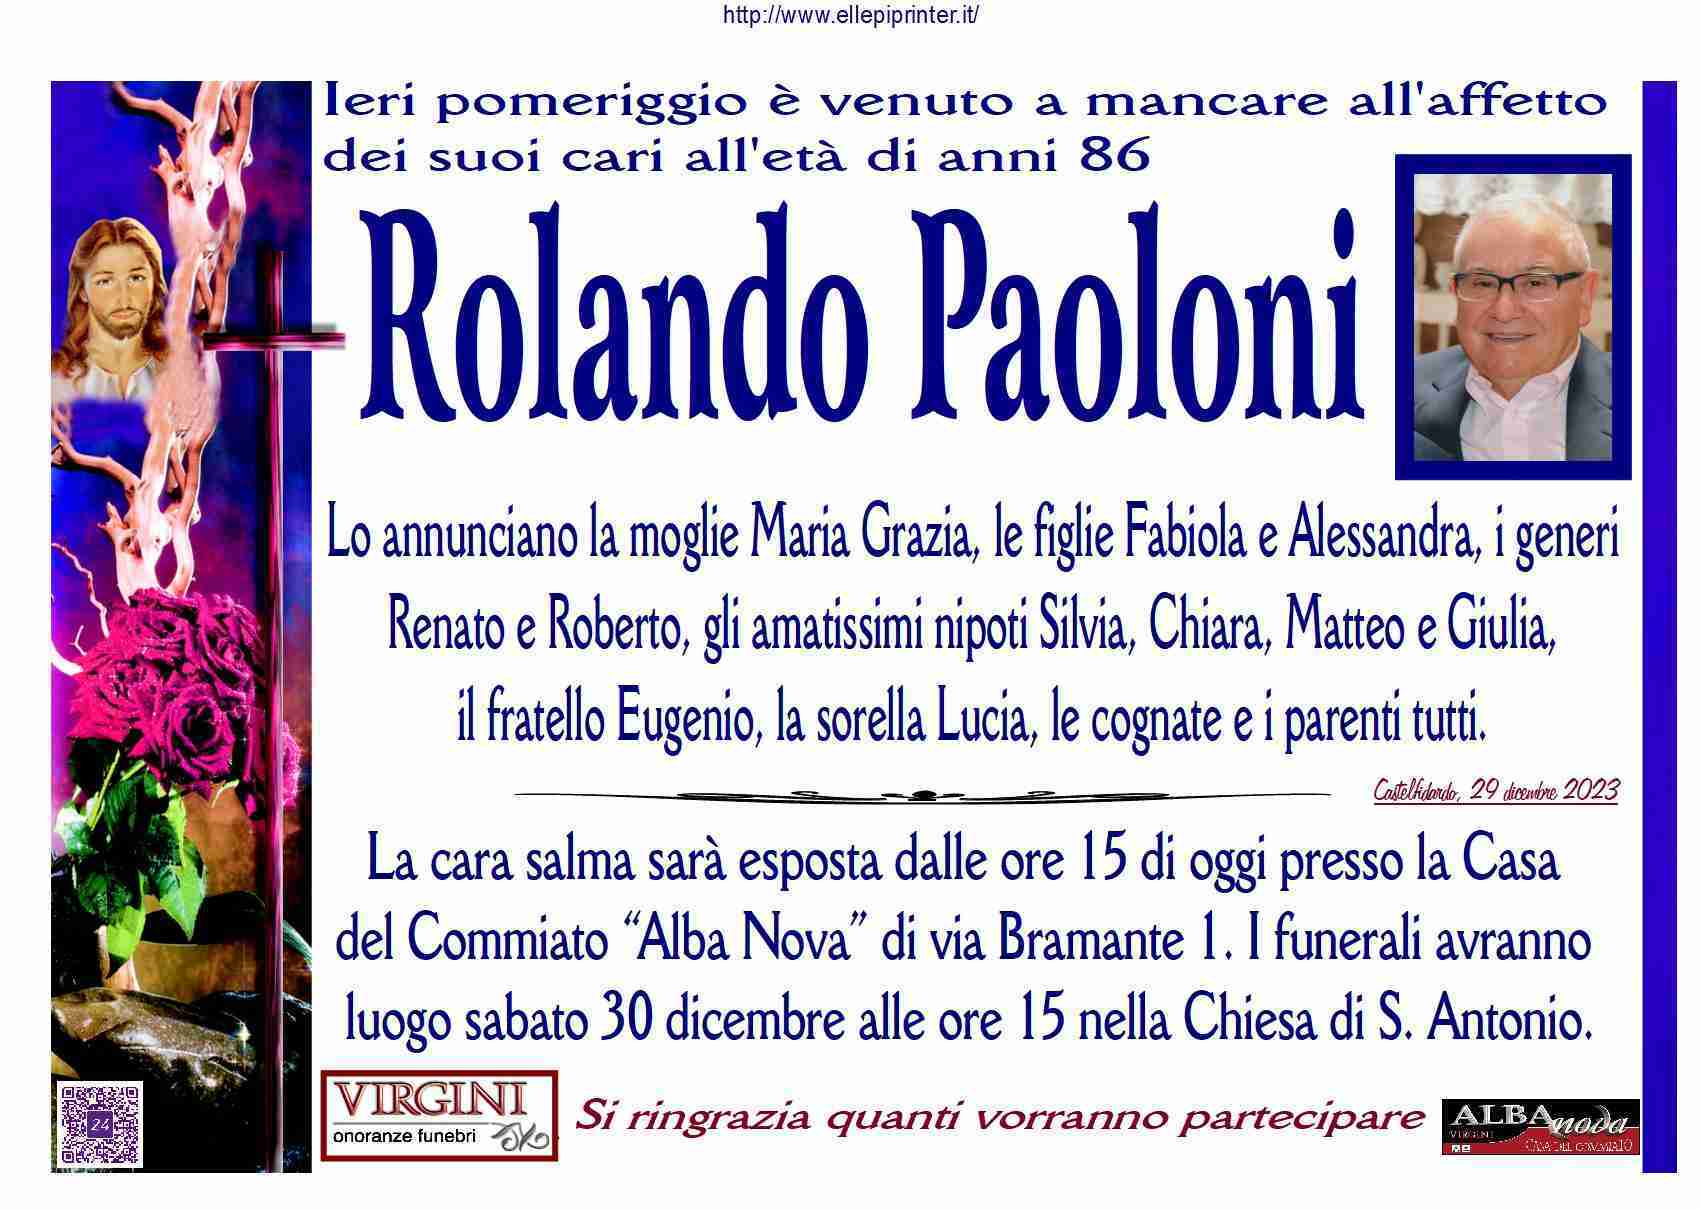 Rolando Paoloni